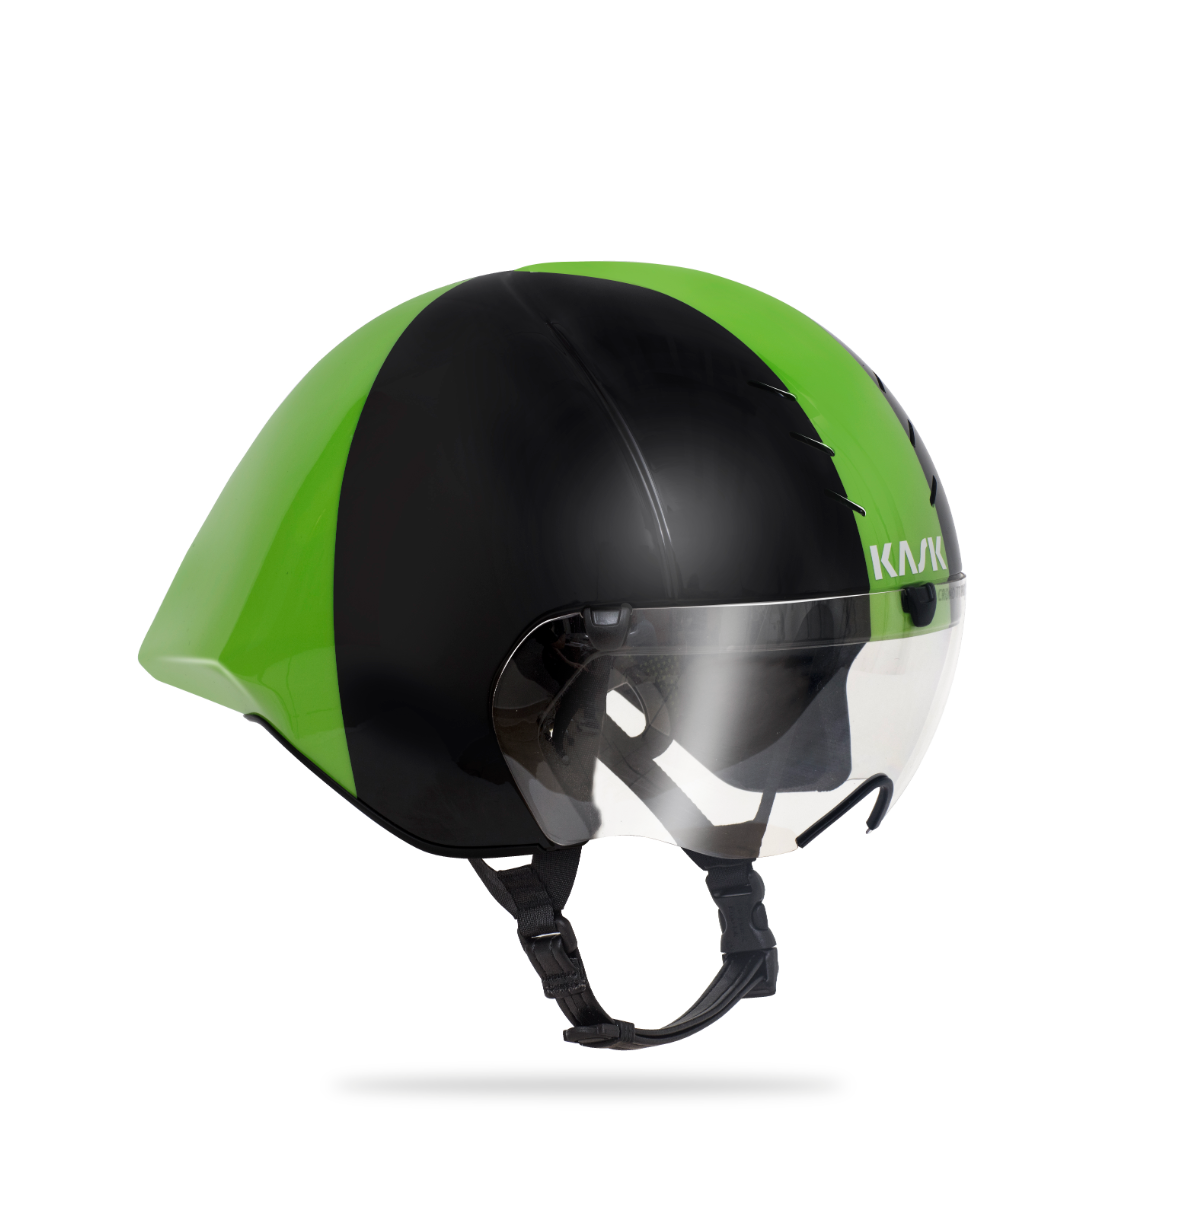 KASK Mistral Time Trial Cycling Helmet - Black/Lime Medium